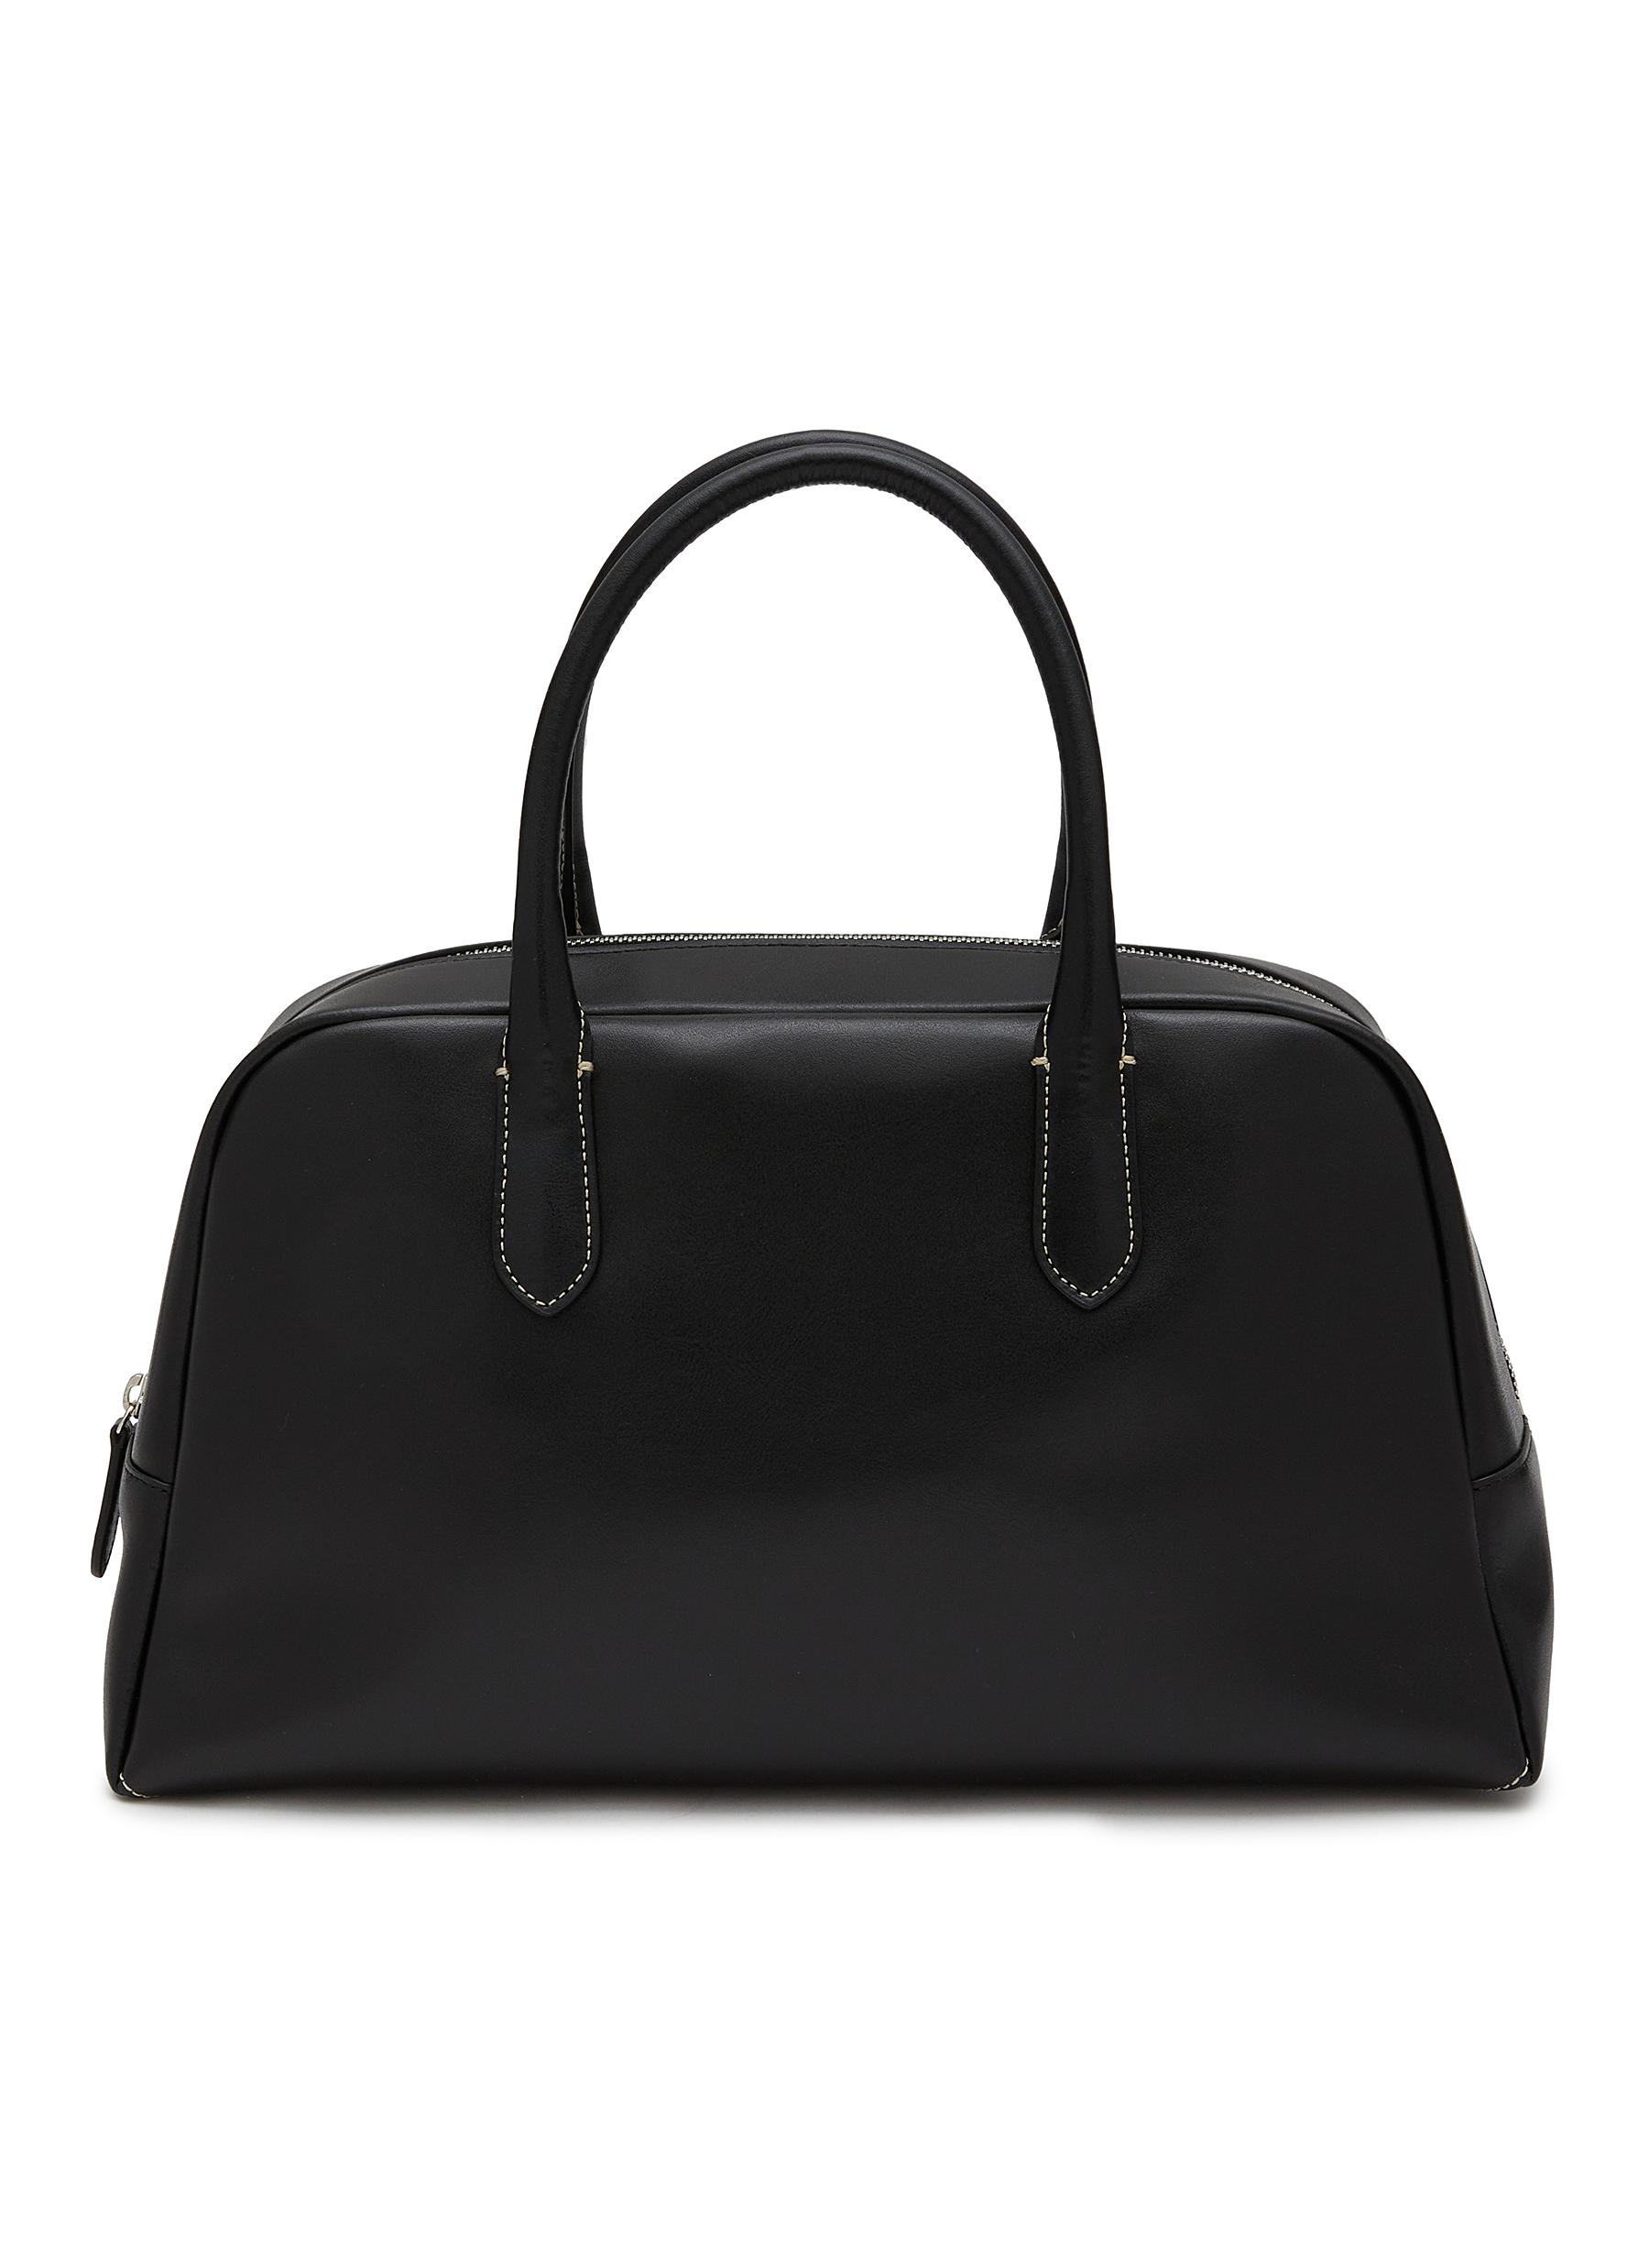 Medium Top Handle Leather Bag